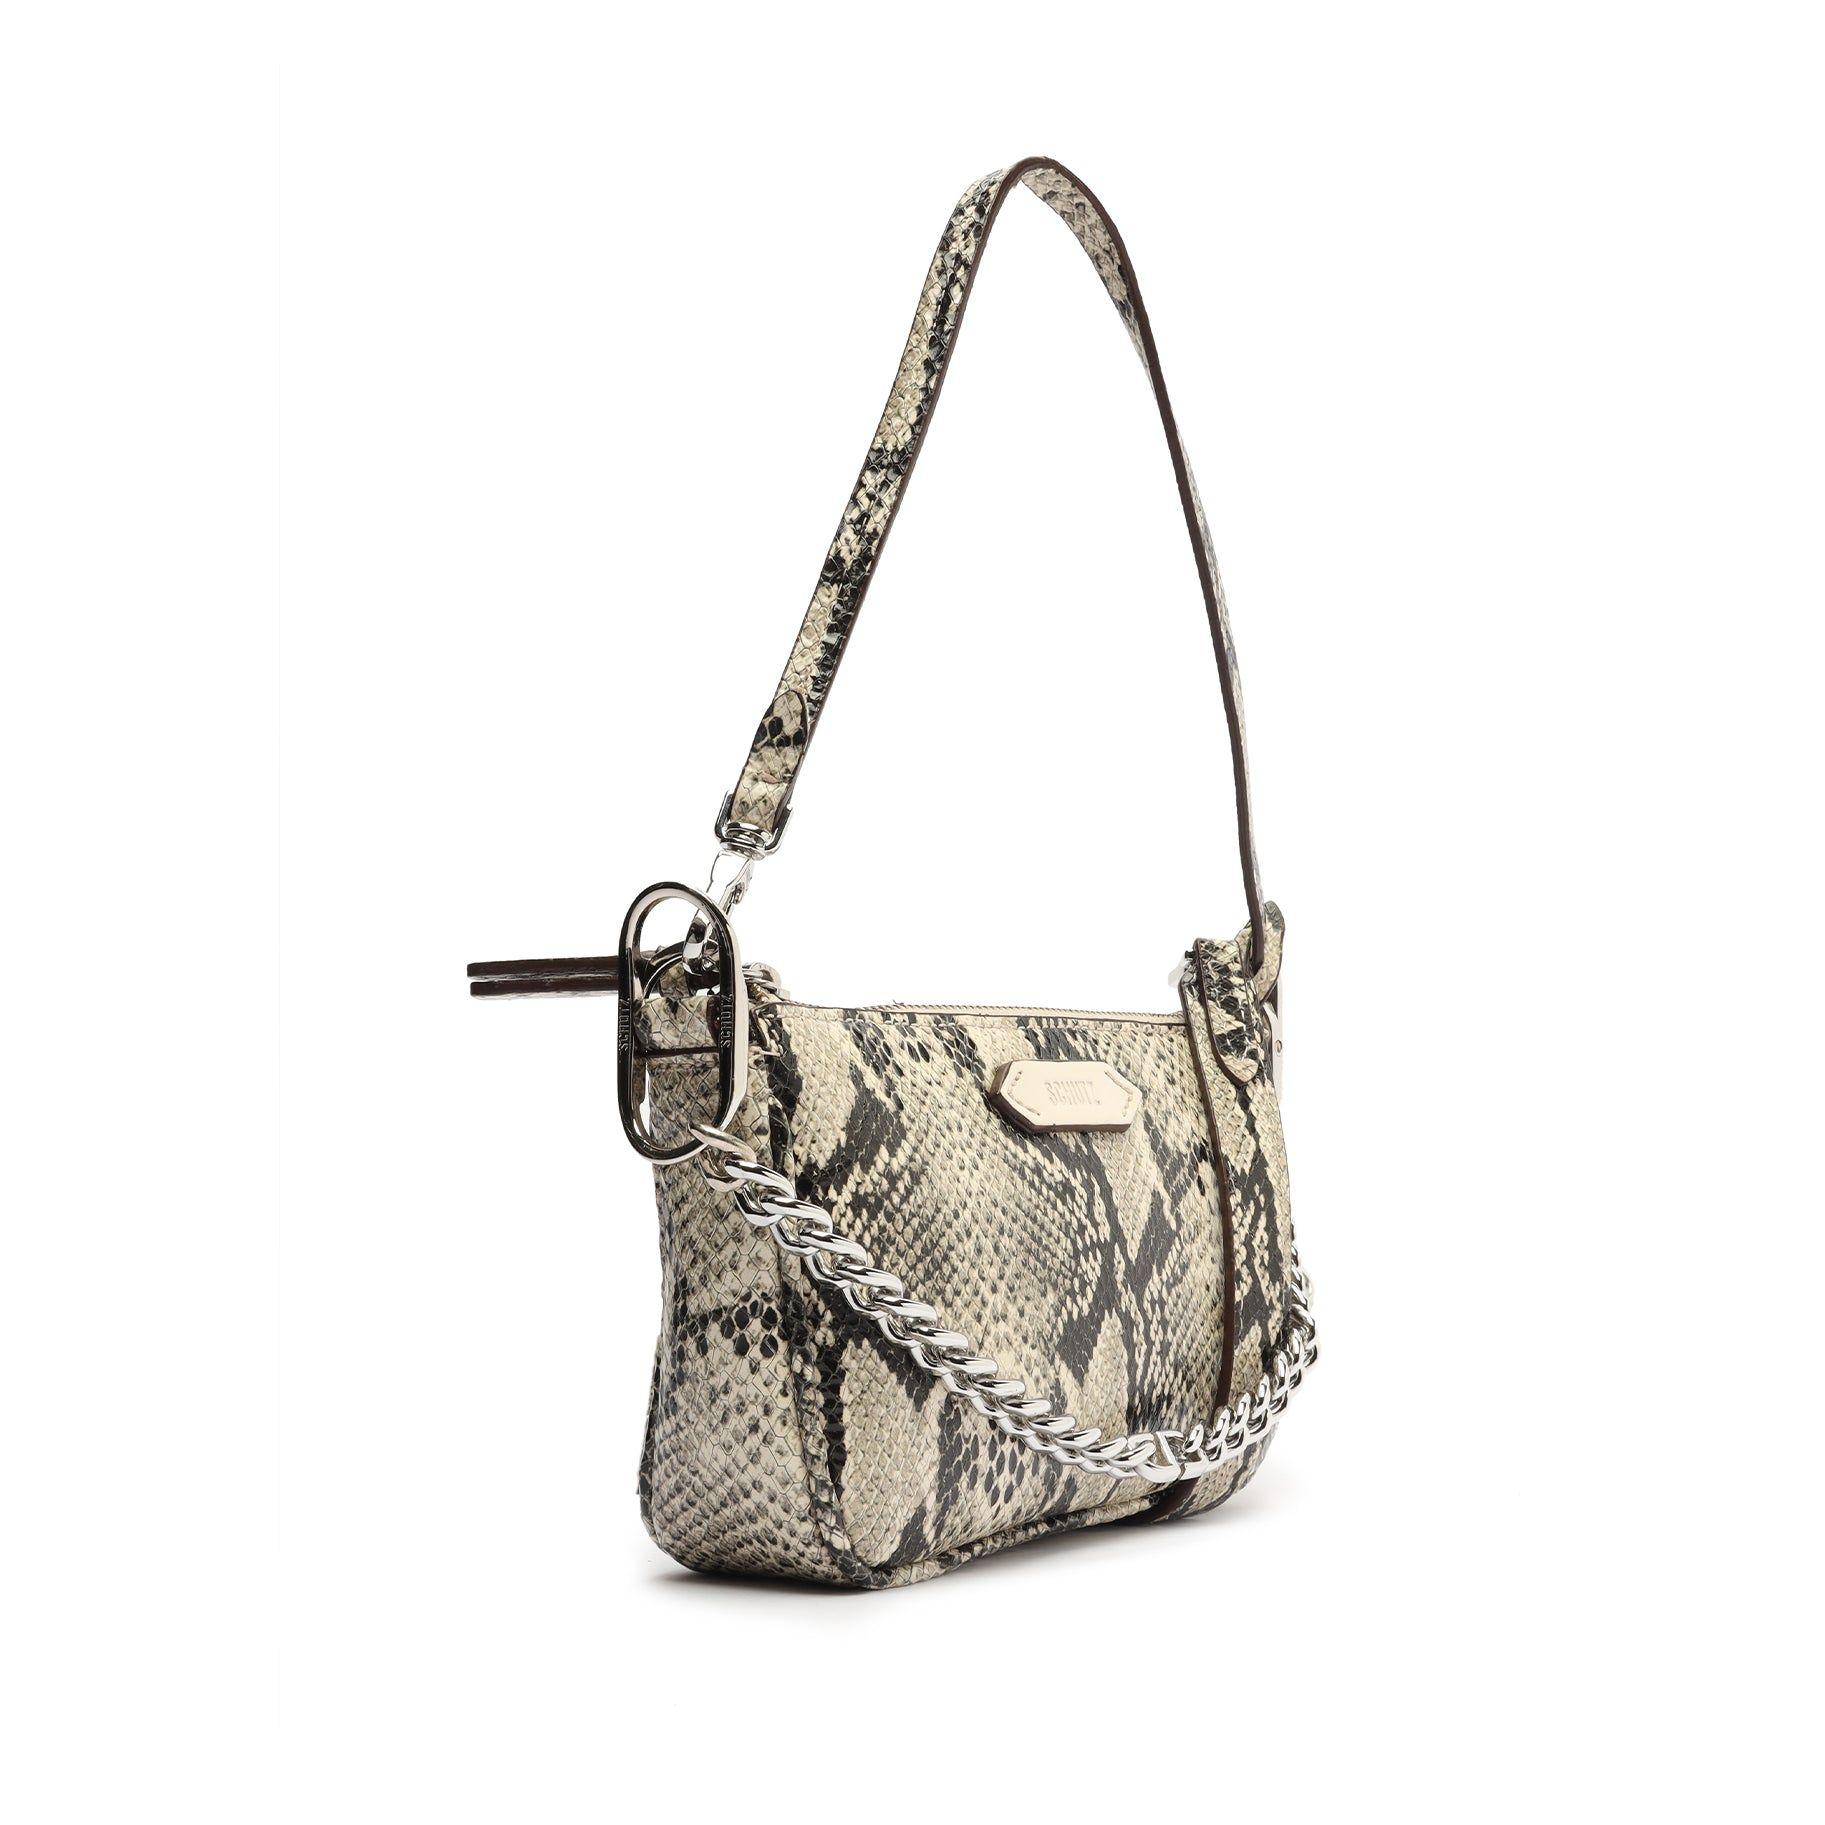 SCHUTZ SHOES Crossbody Emmy Snake-embossed Leather Handbag in Metallic |  Lyst